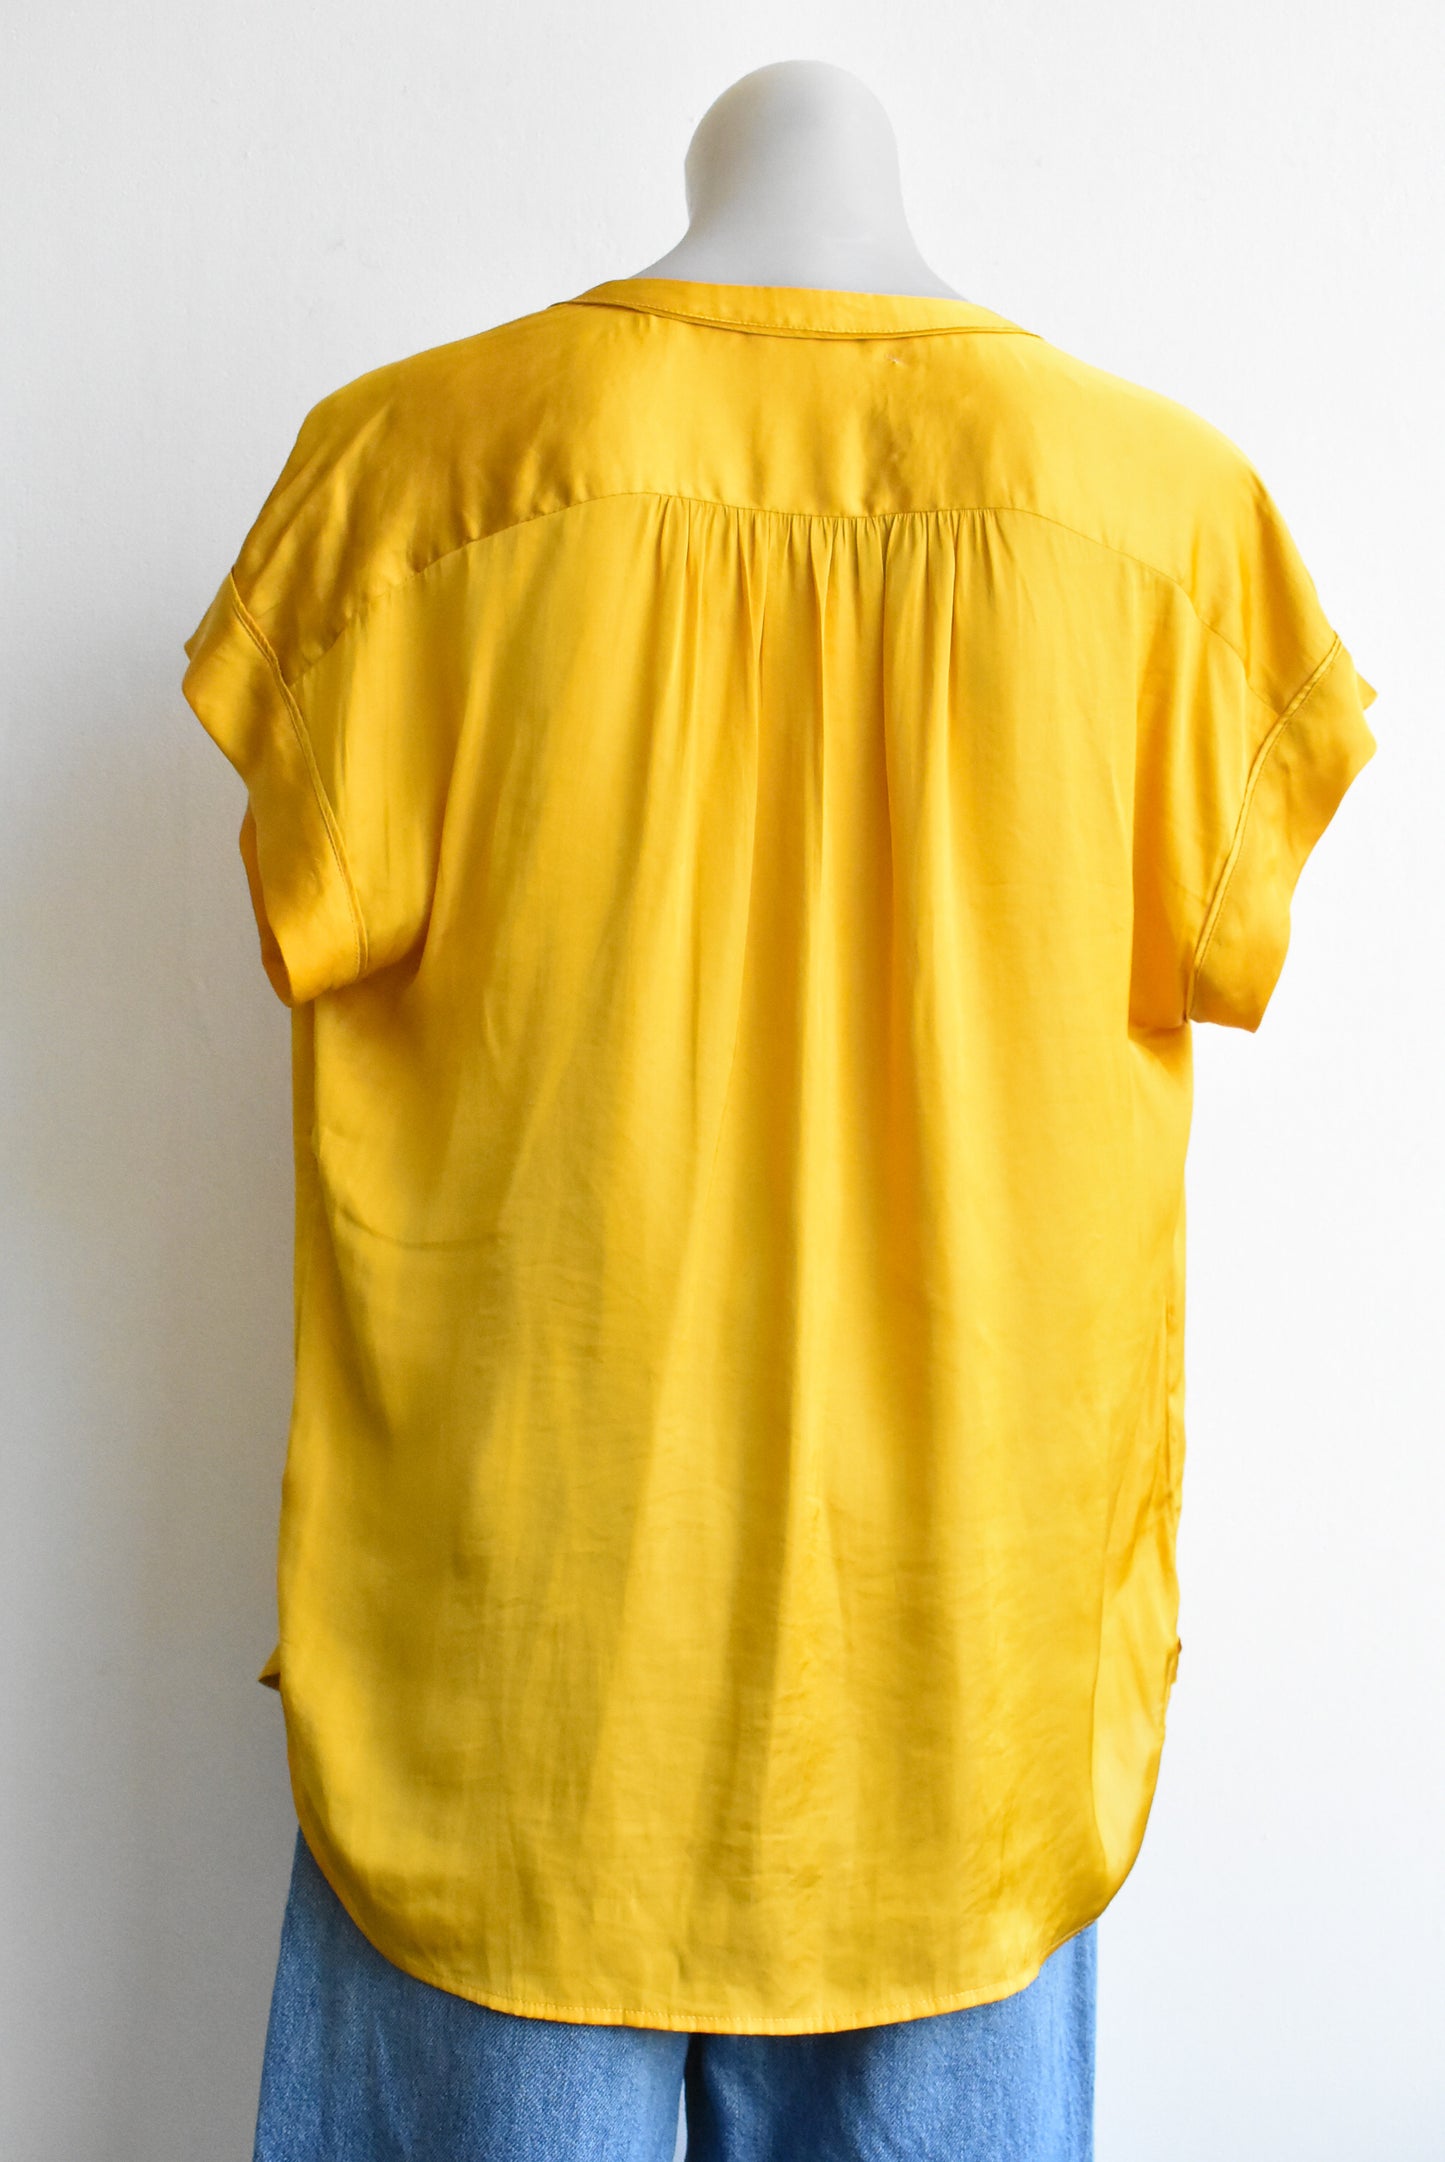 Short sleeve, yellow button blouse